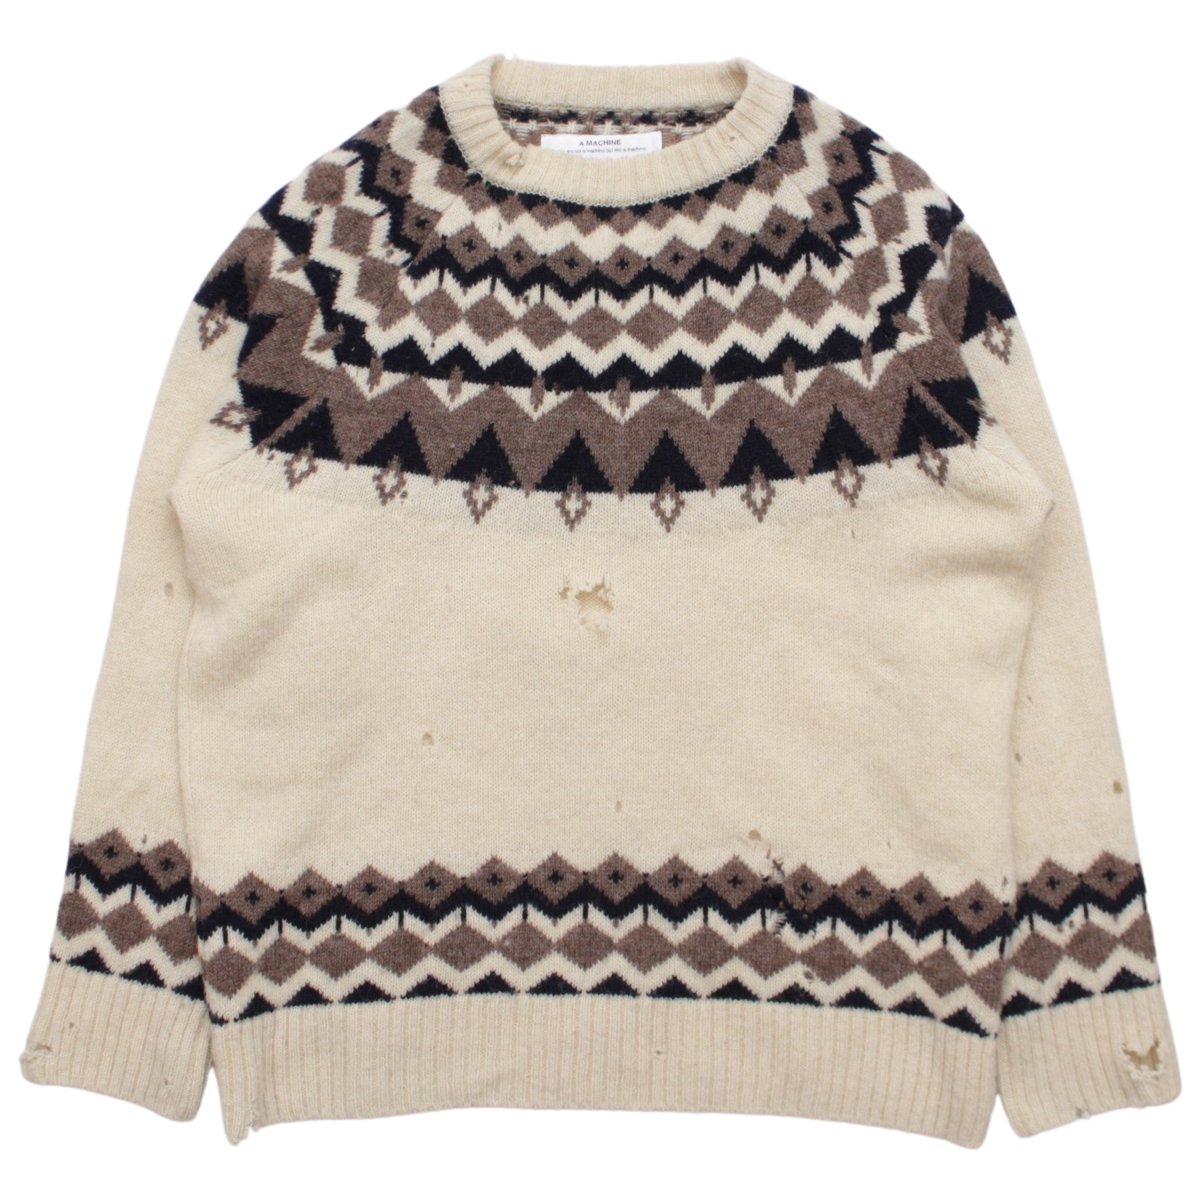 Coordinates Knit Sweater